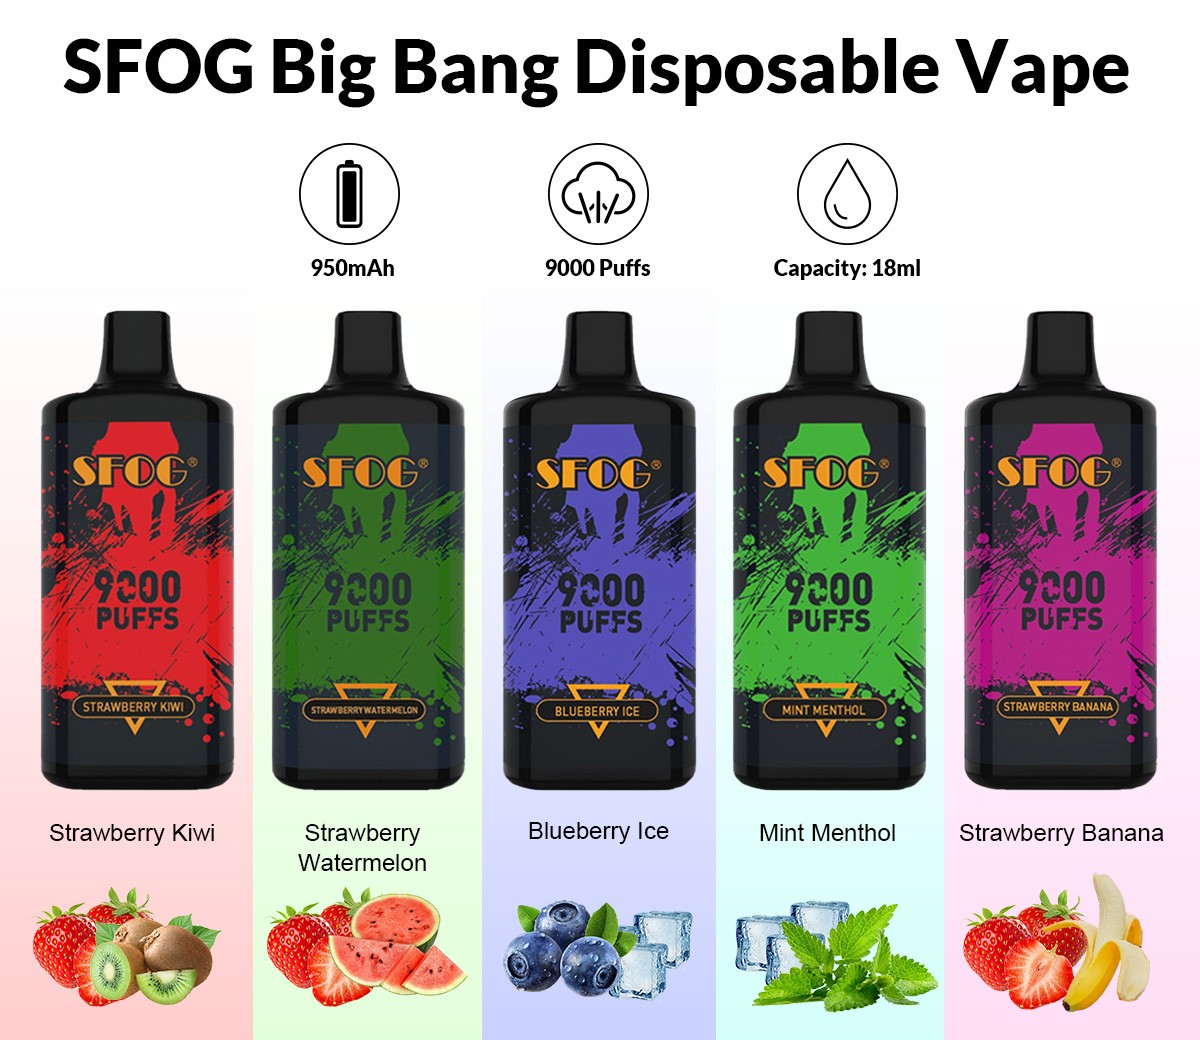 SFOG Big Bang Disposable Vape 9000 Puffs Price £9.99